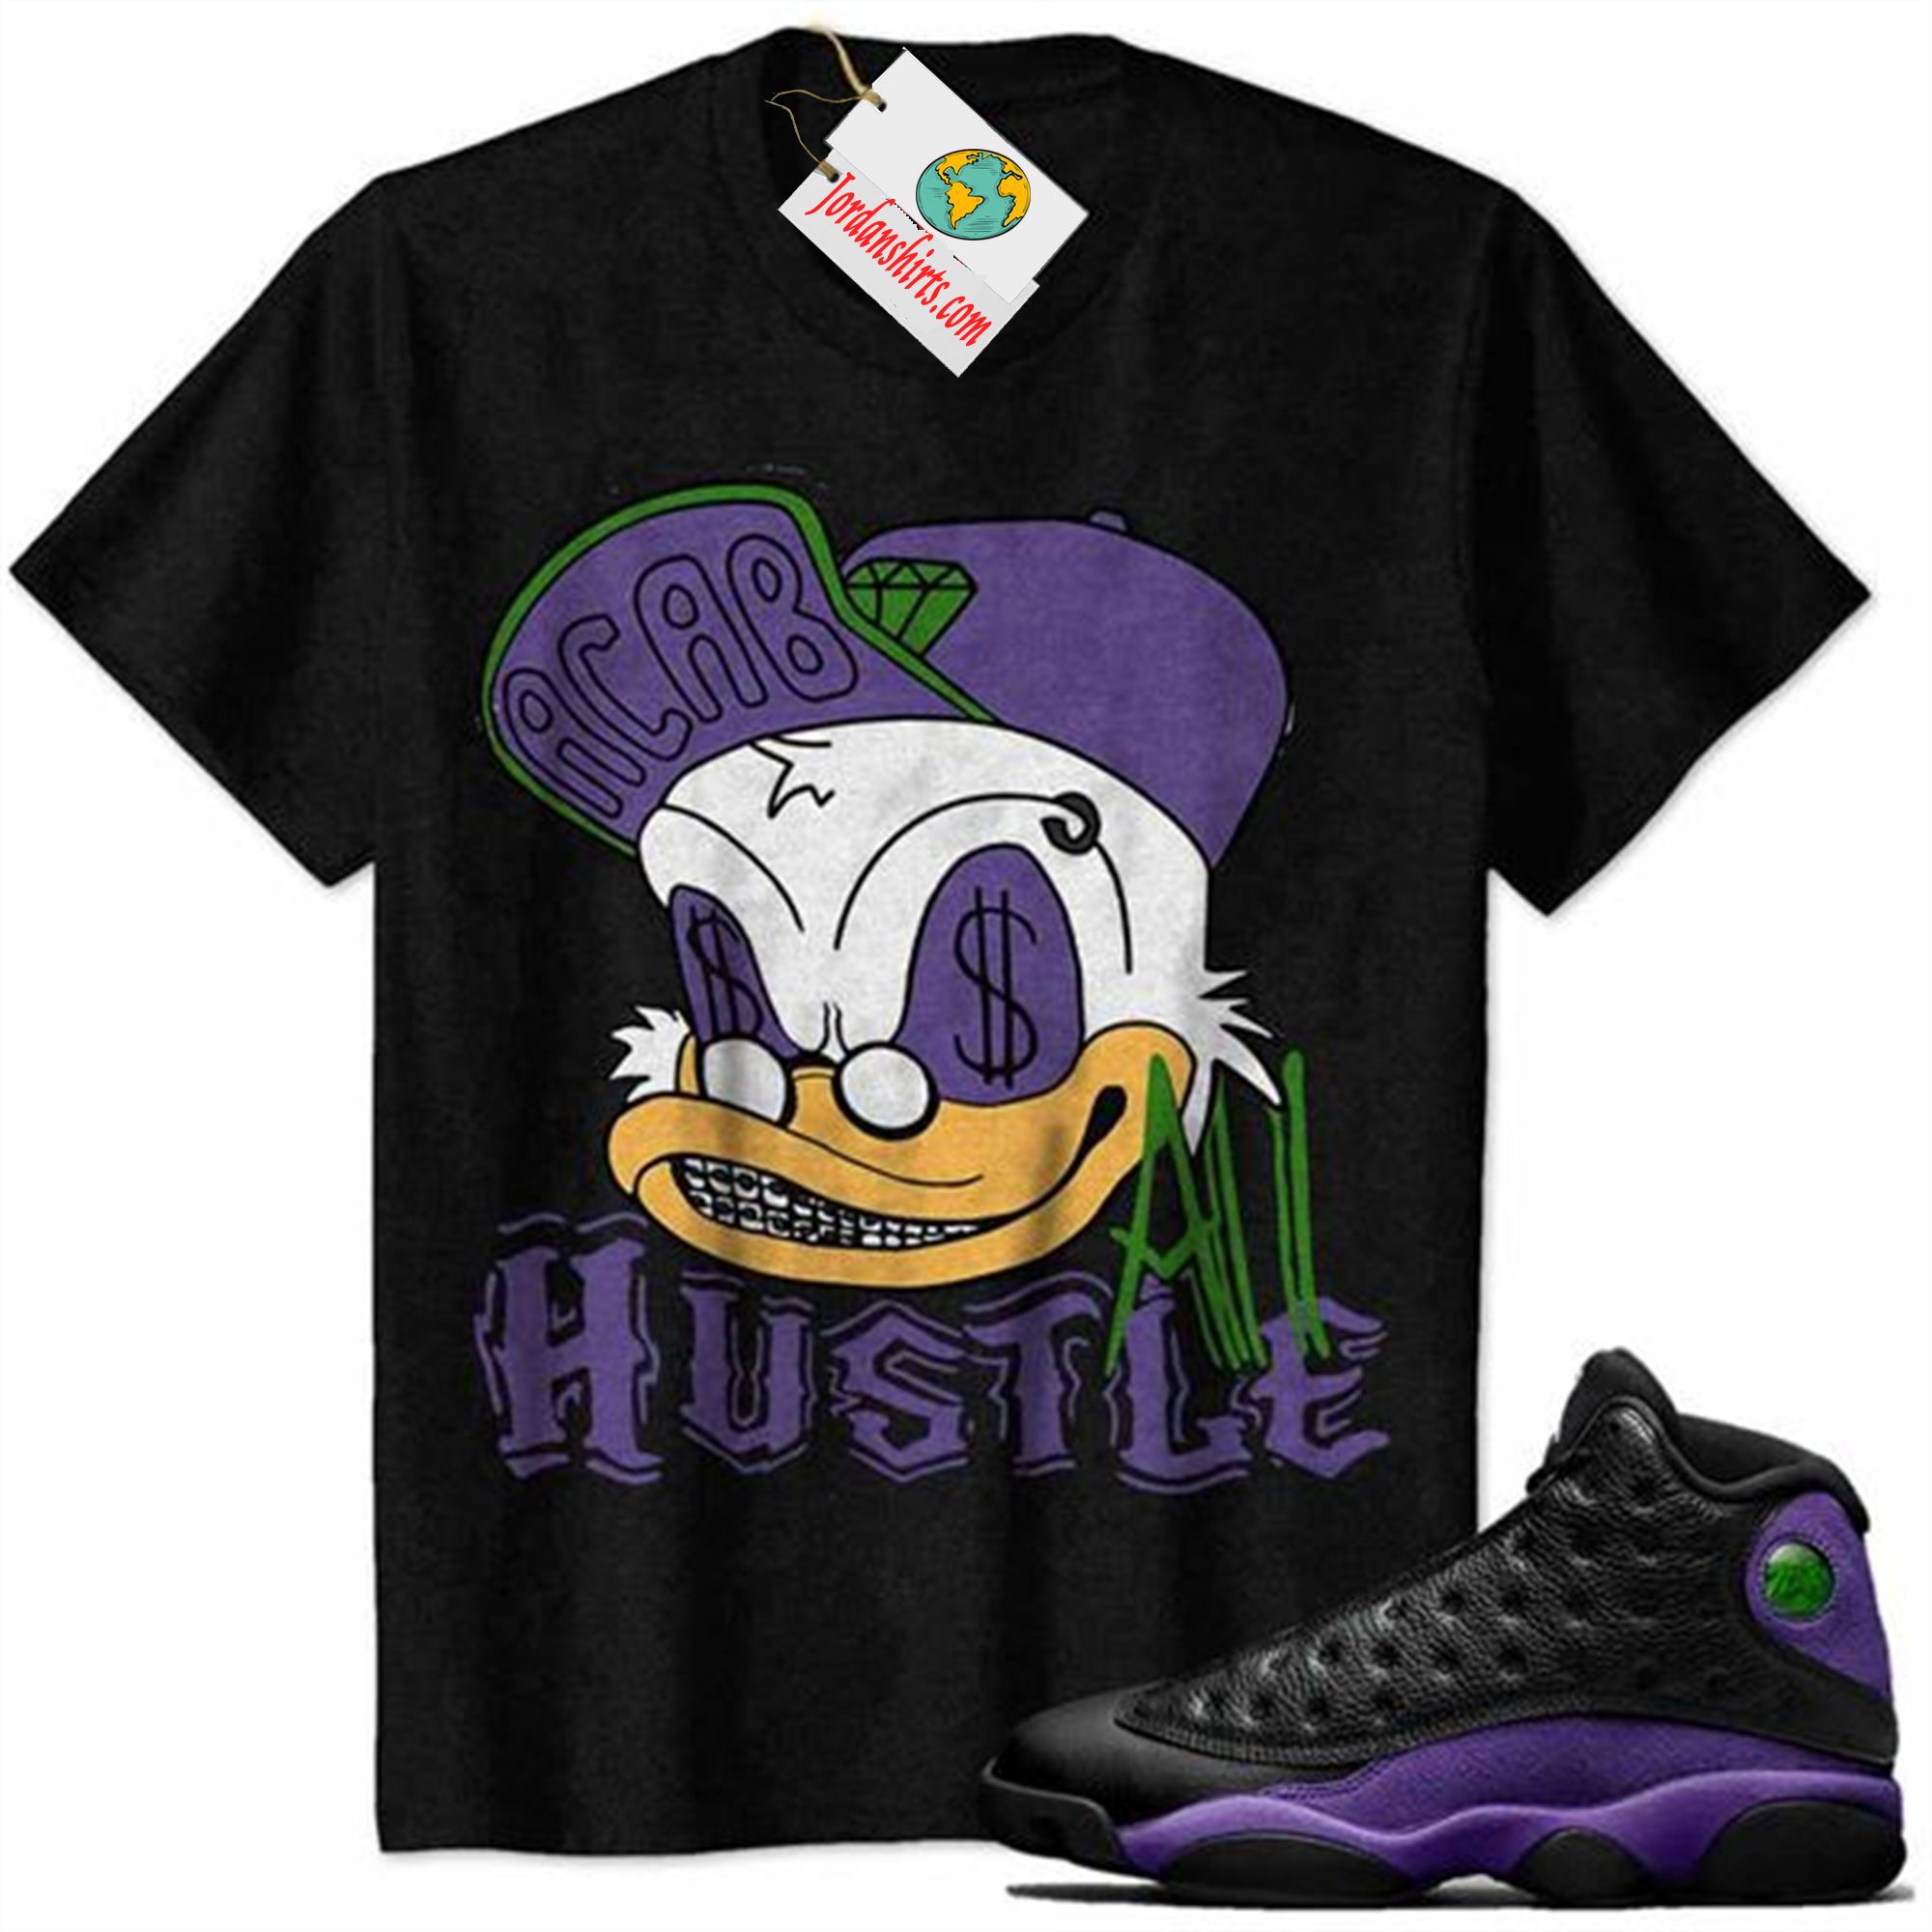 Jordan 13 Shirt, All Hustle Duck Black Air Jordan 13 Court Purple 13s Plus Size Up To 5xl